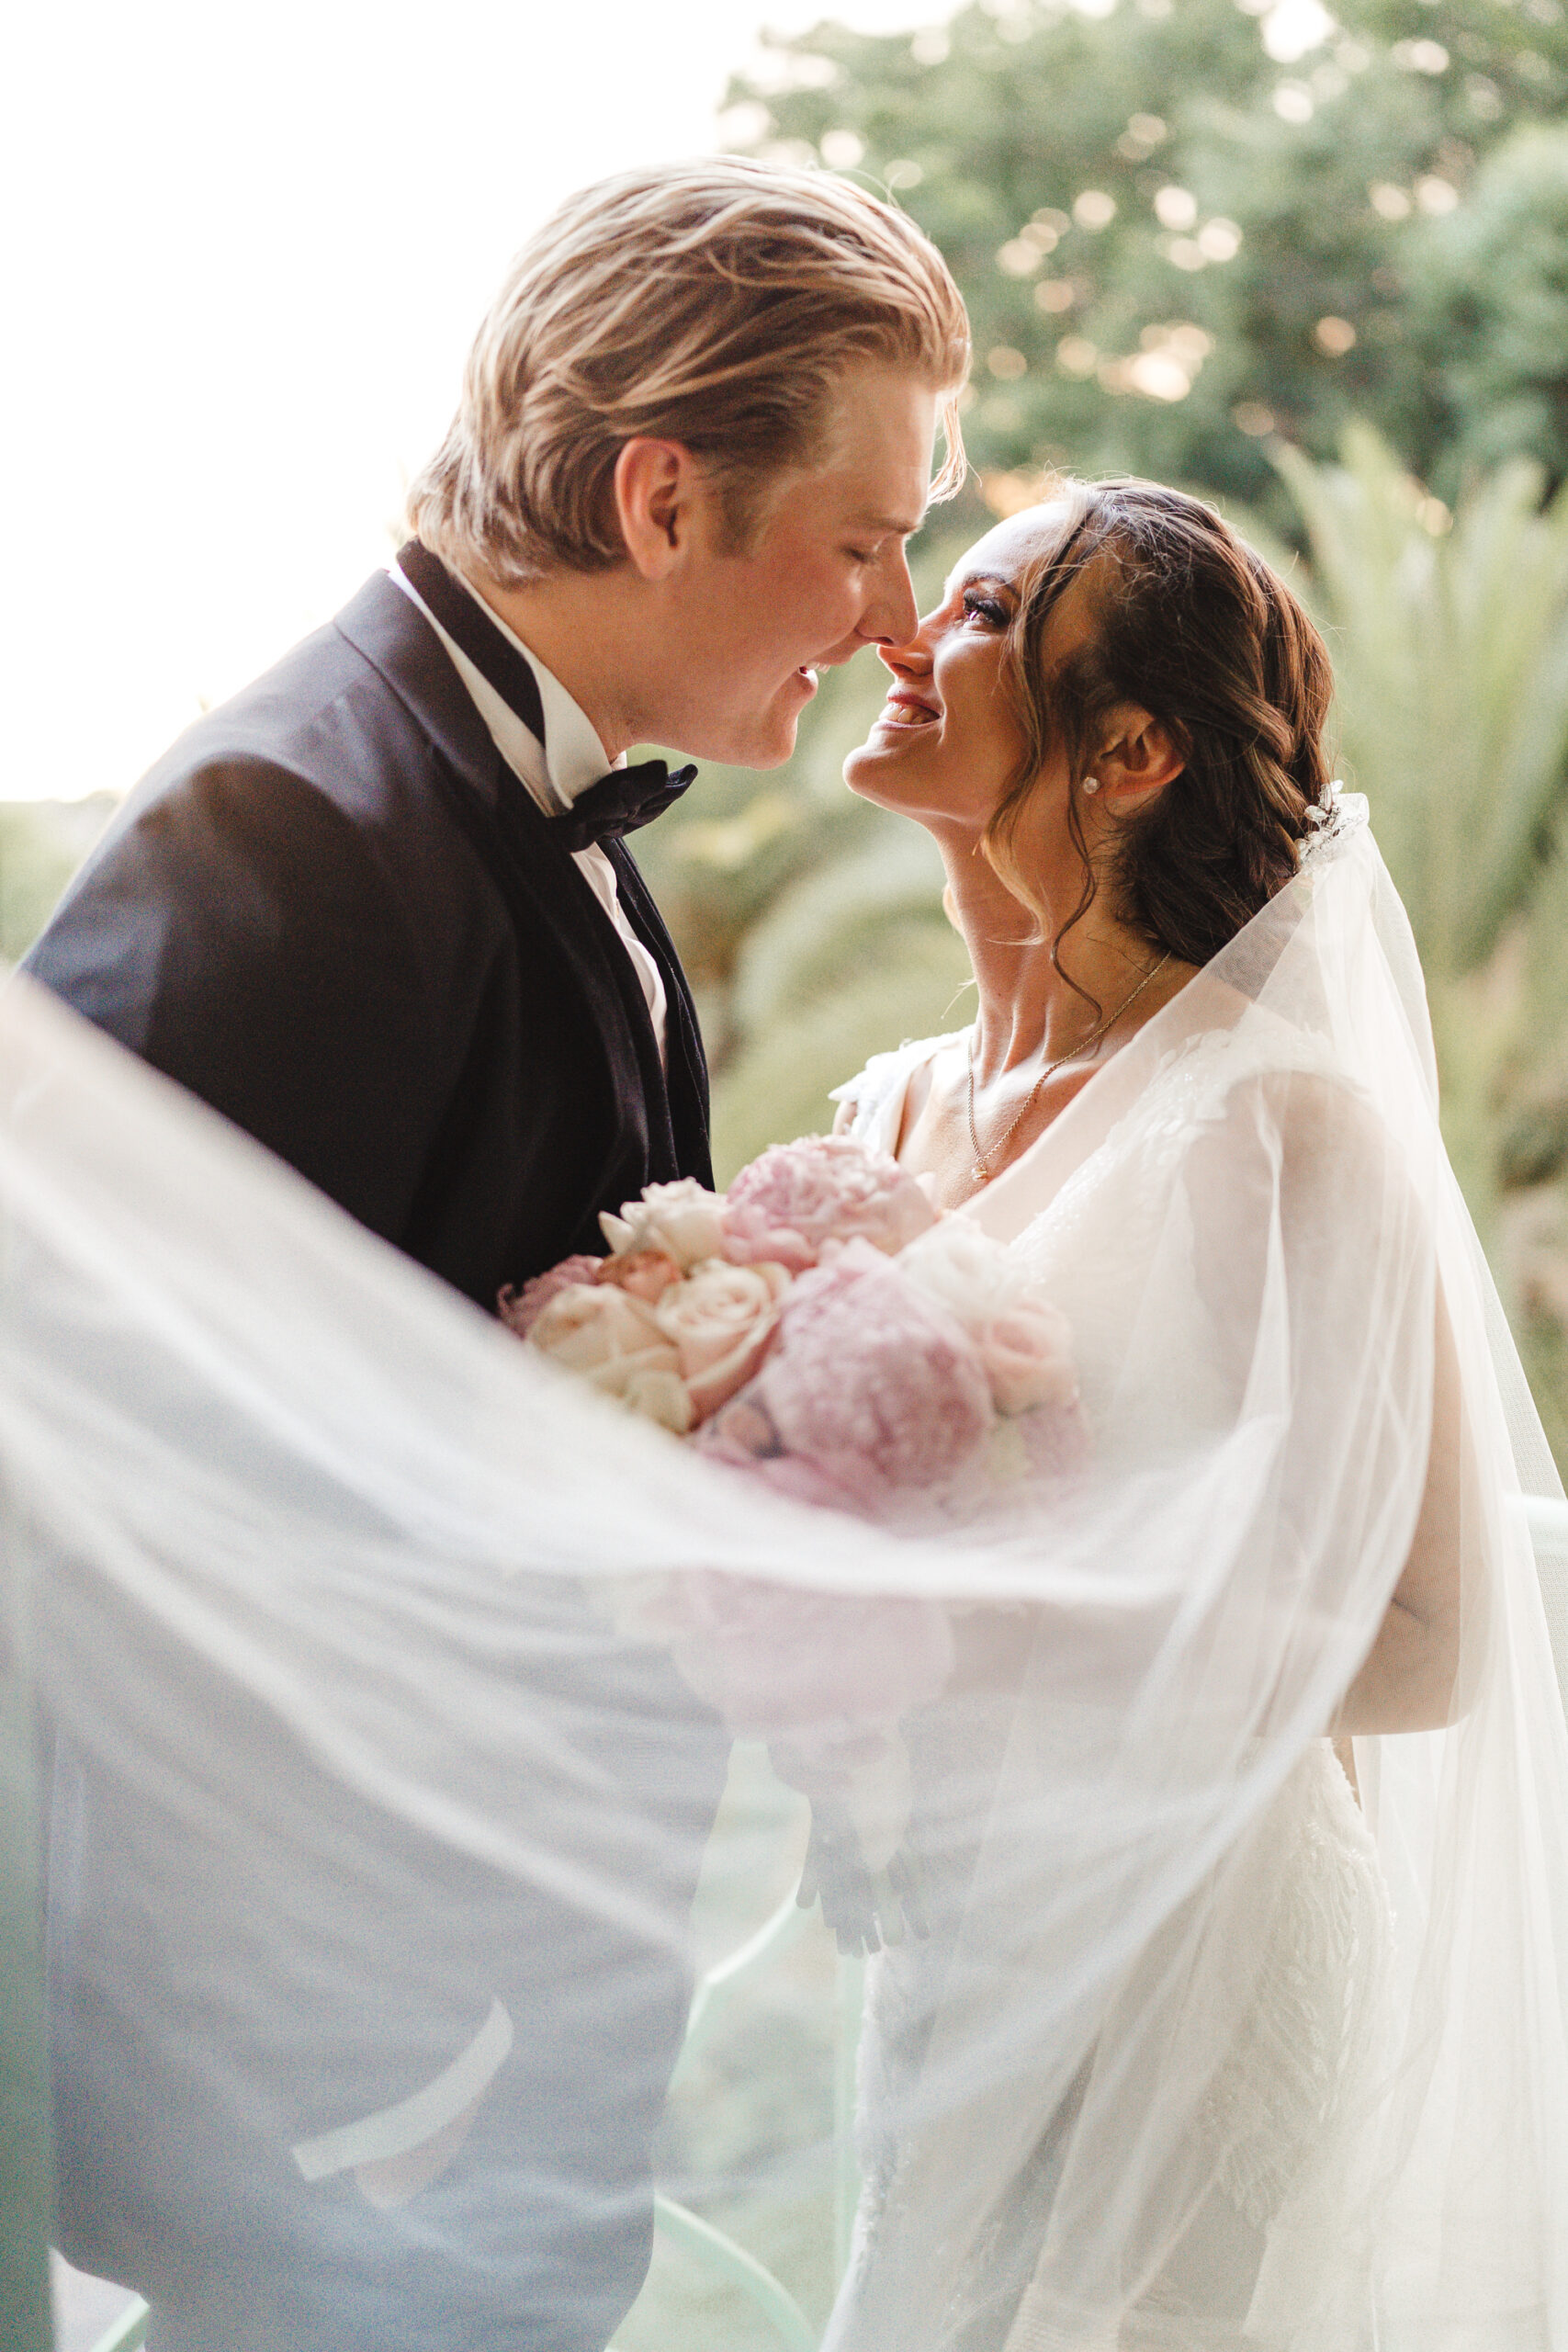 Romantic Bride and Groom Veil Wedding Portrait | J&S Media